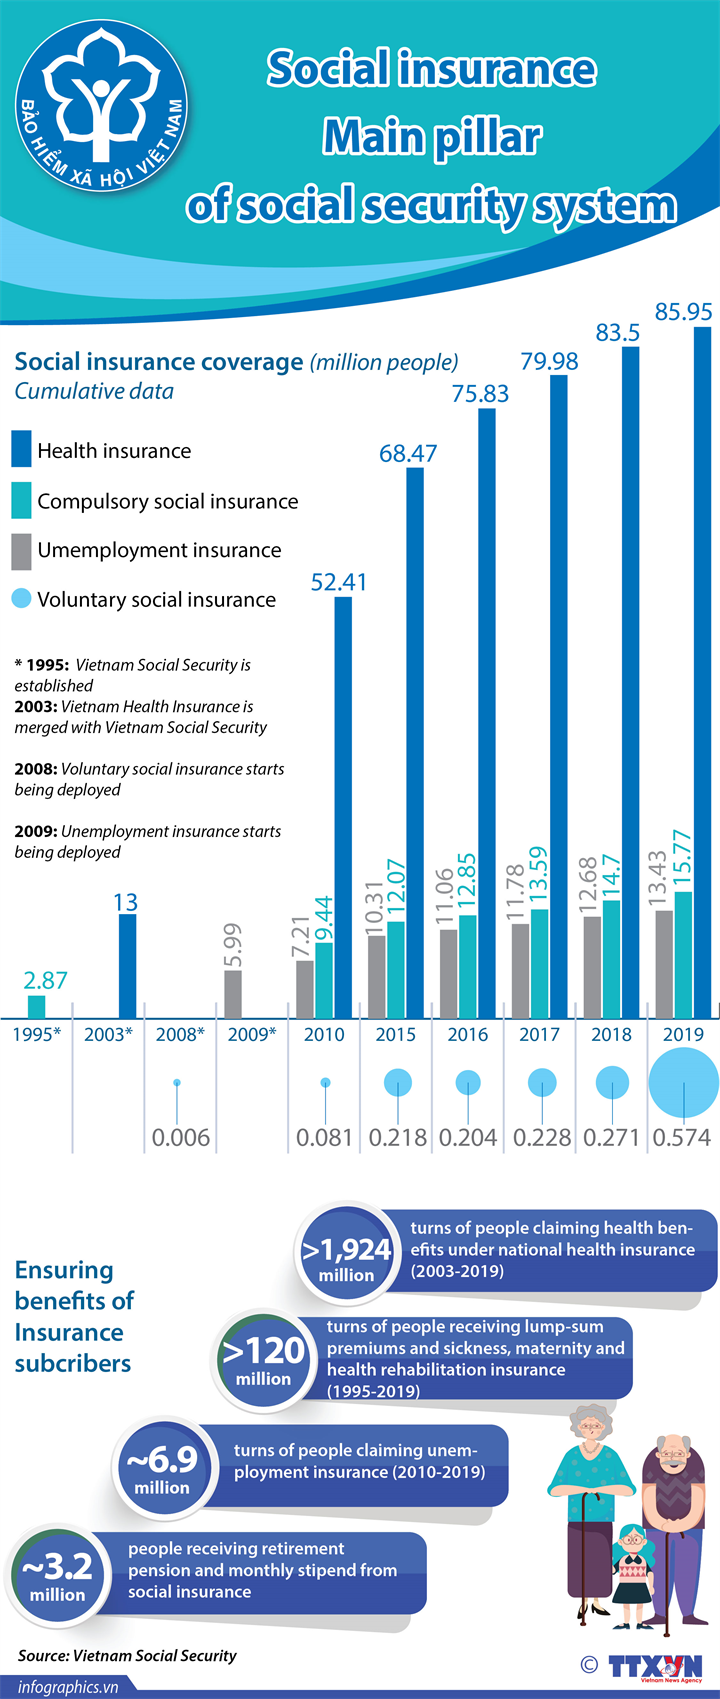 Social insurance: Main pillar of social security system